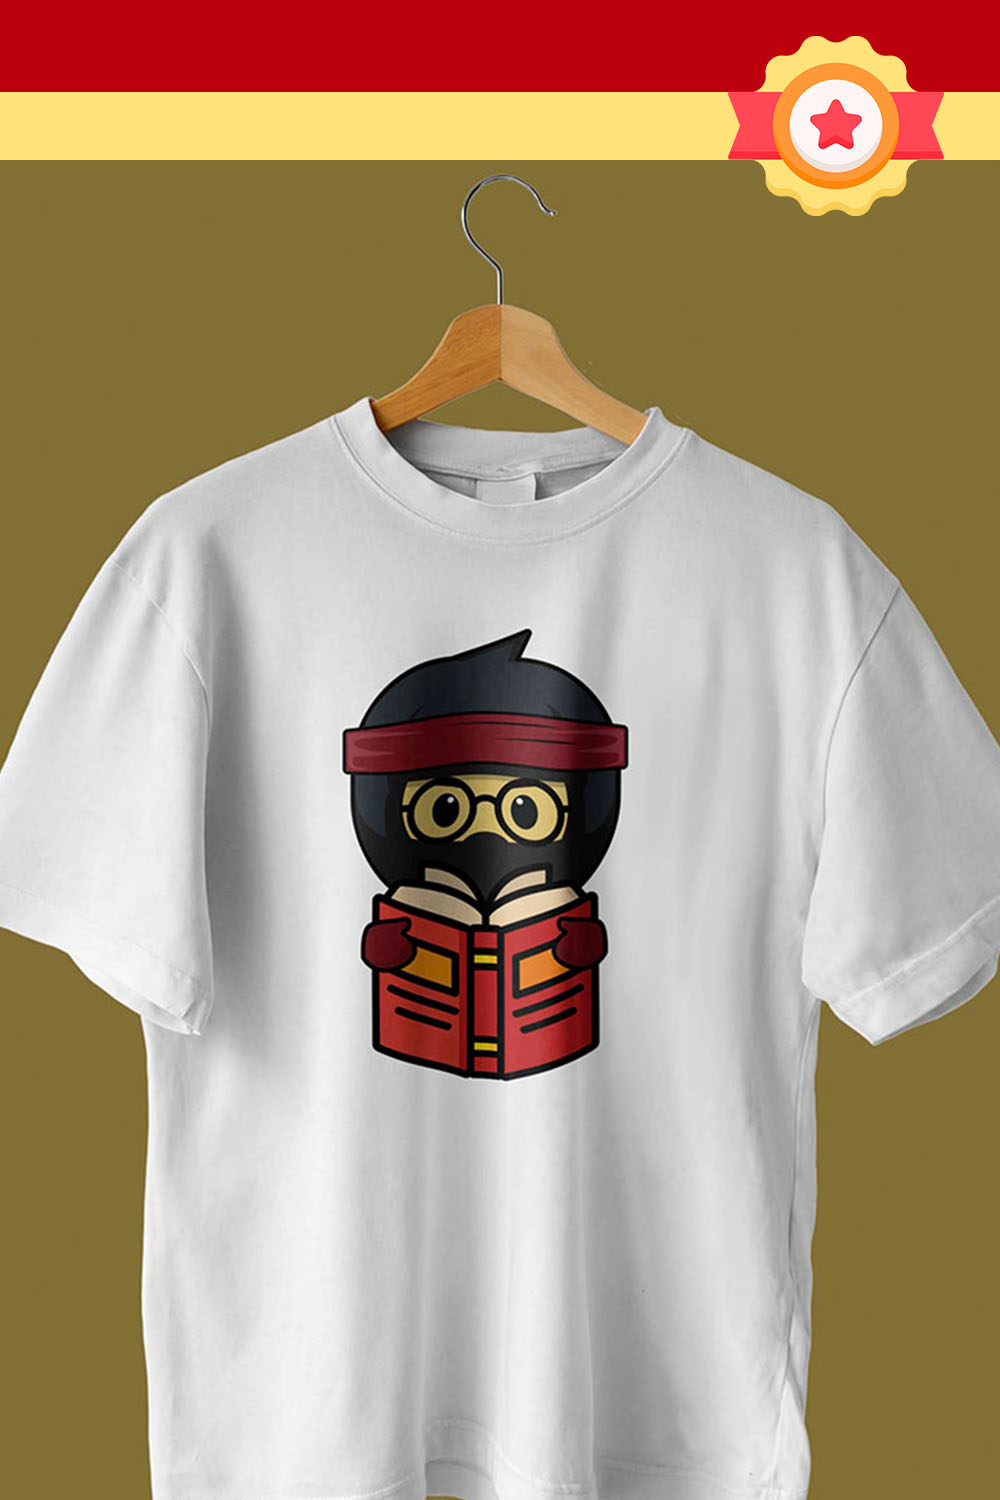 Ninja Reading Illustration T-shirt Pinterest collage image.